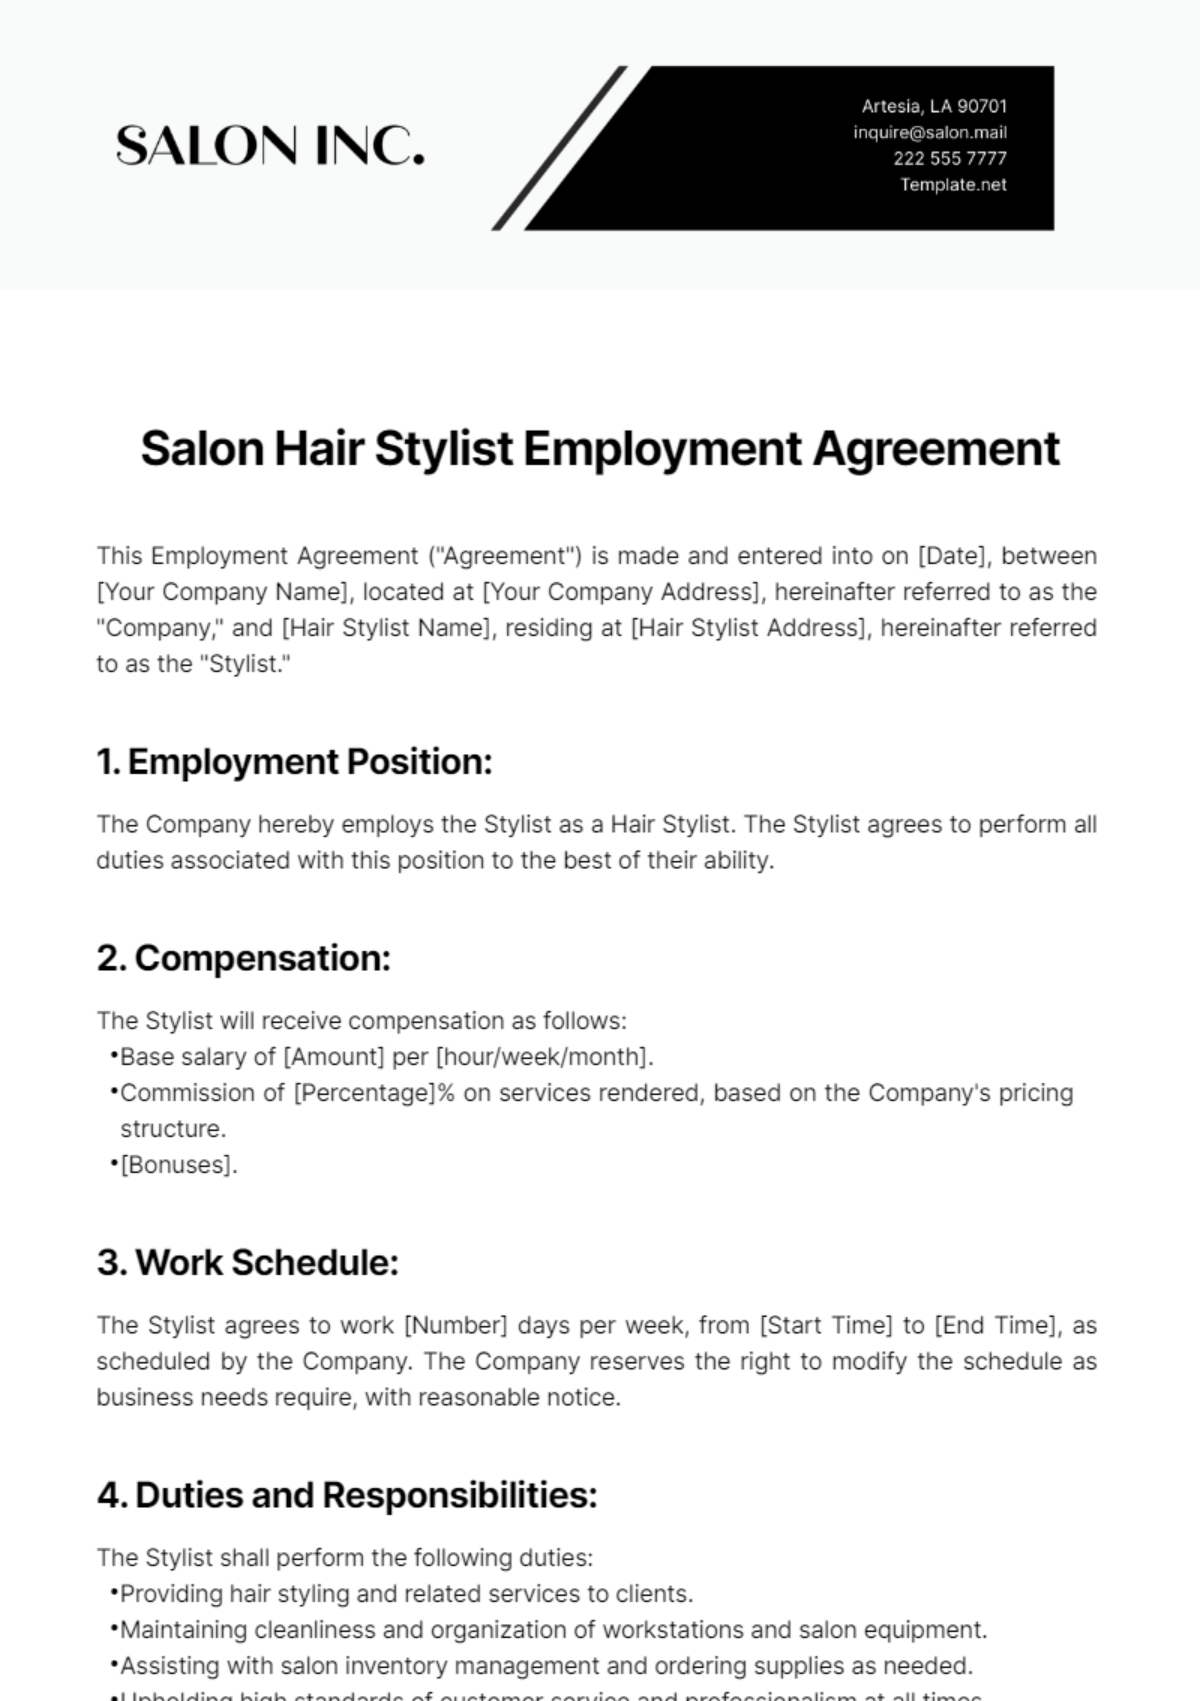 Salon Hair Stylist Employment Agreement Template